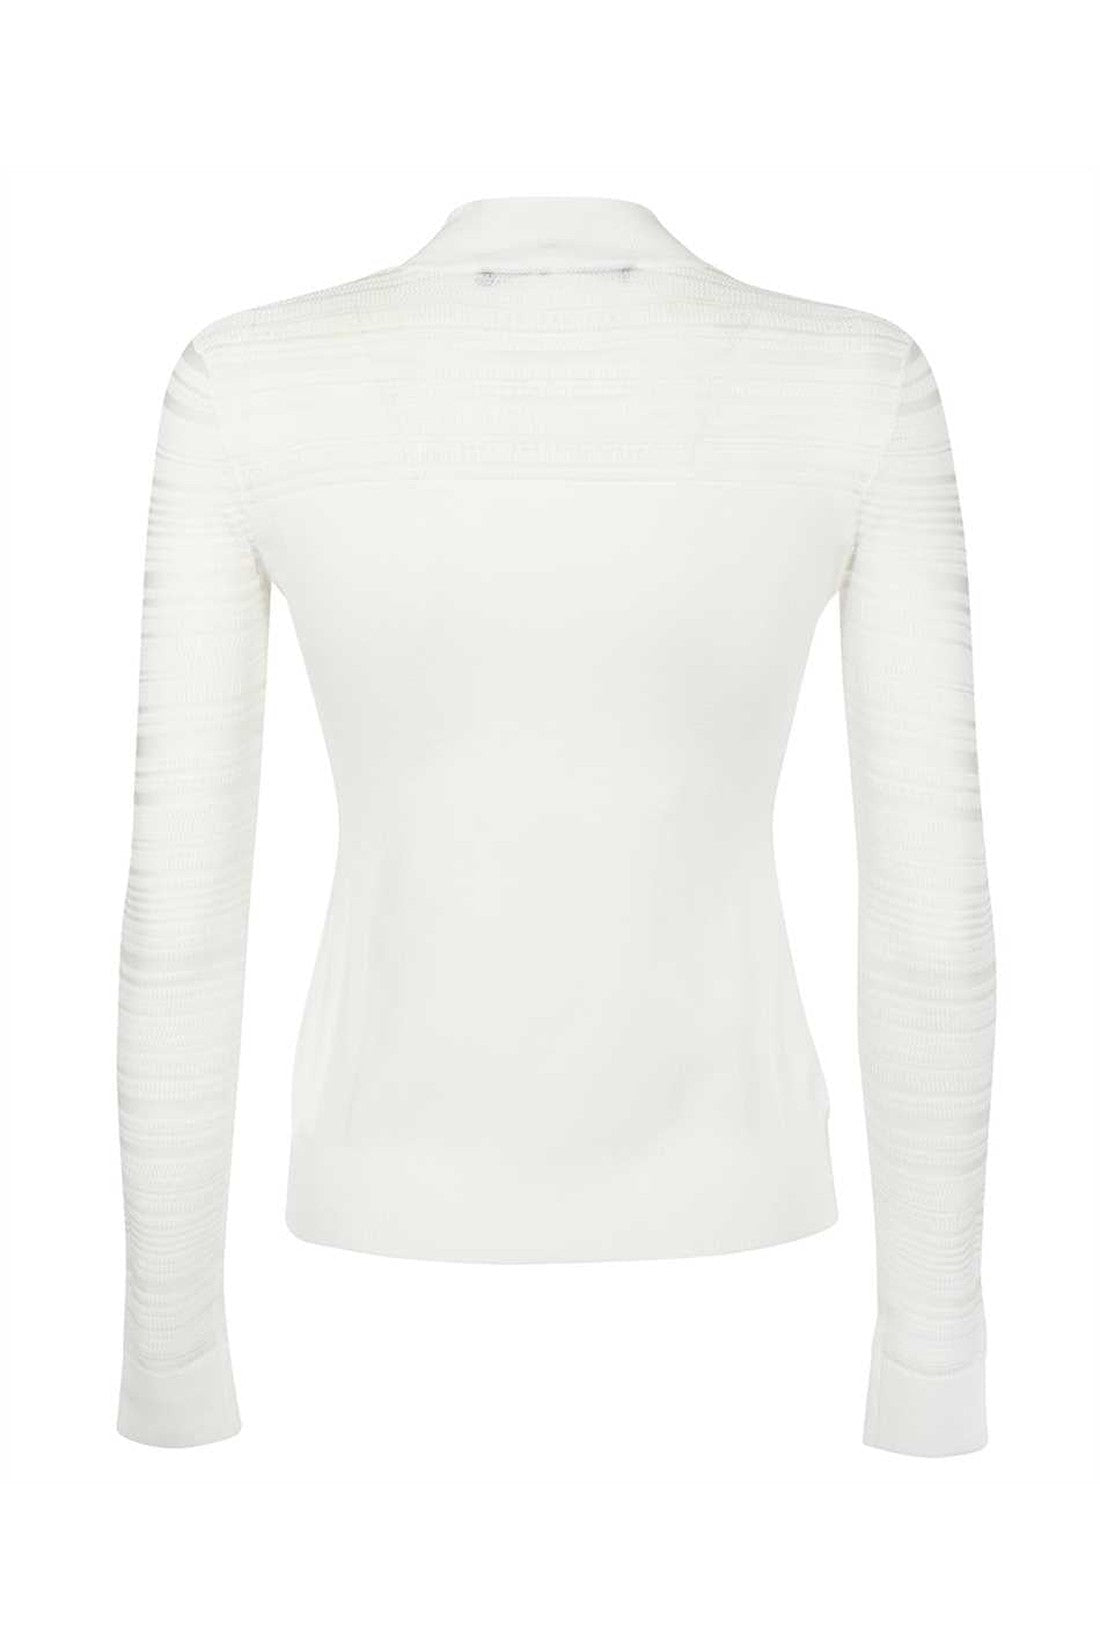 Turtleneck sweater-Karl Lagerfeld-OUTLET-SALE-ARCHIVIST